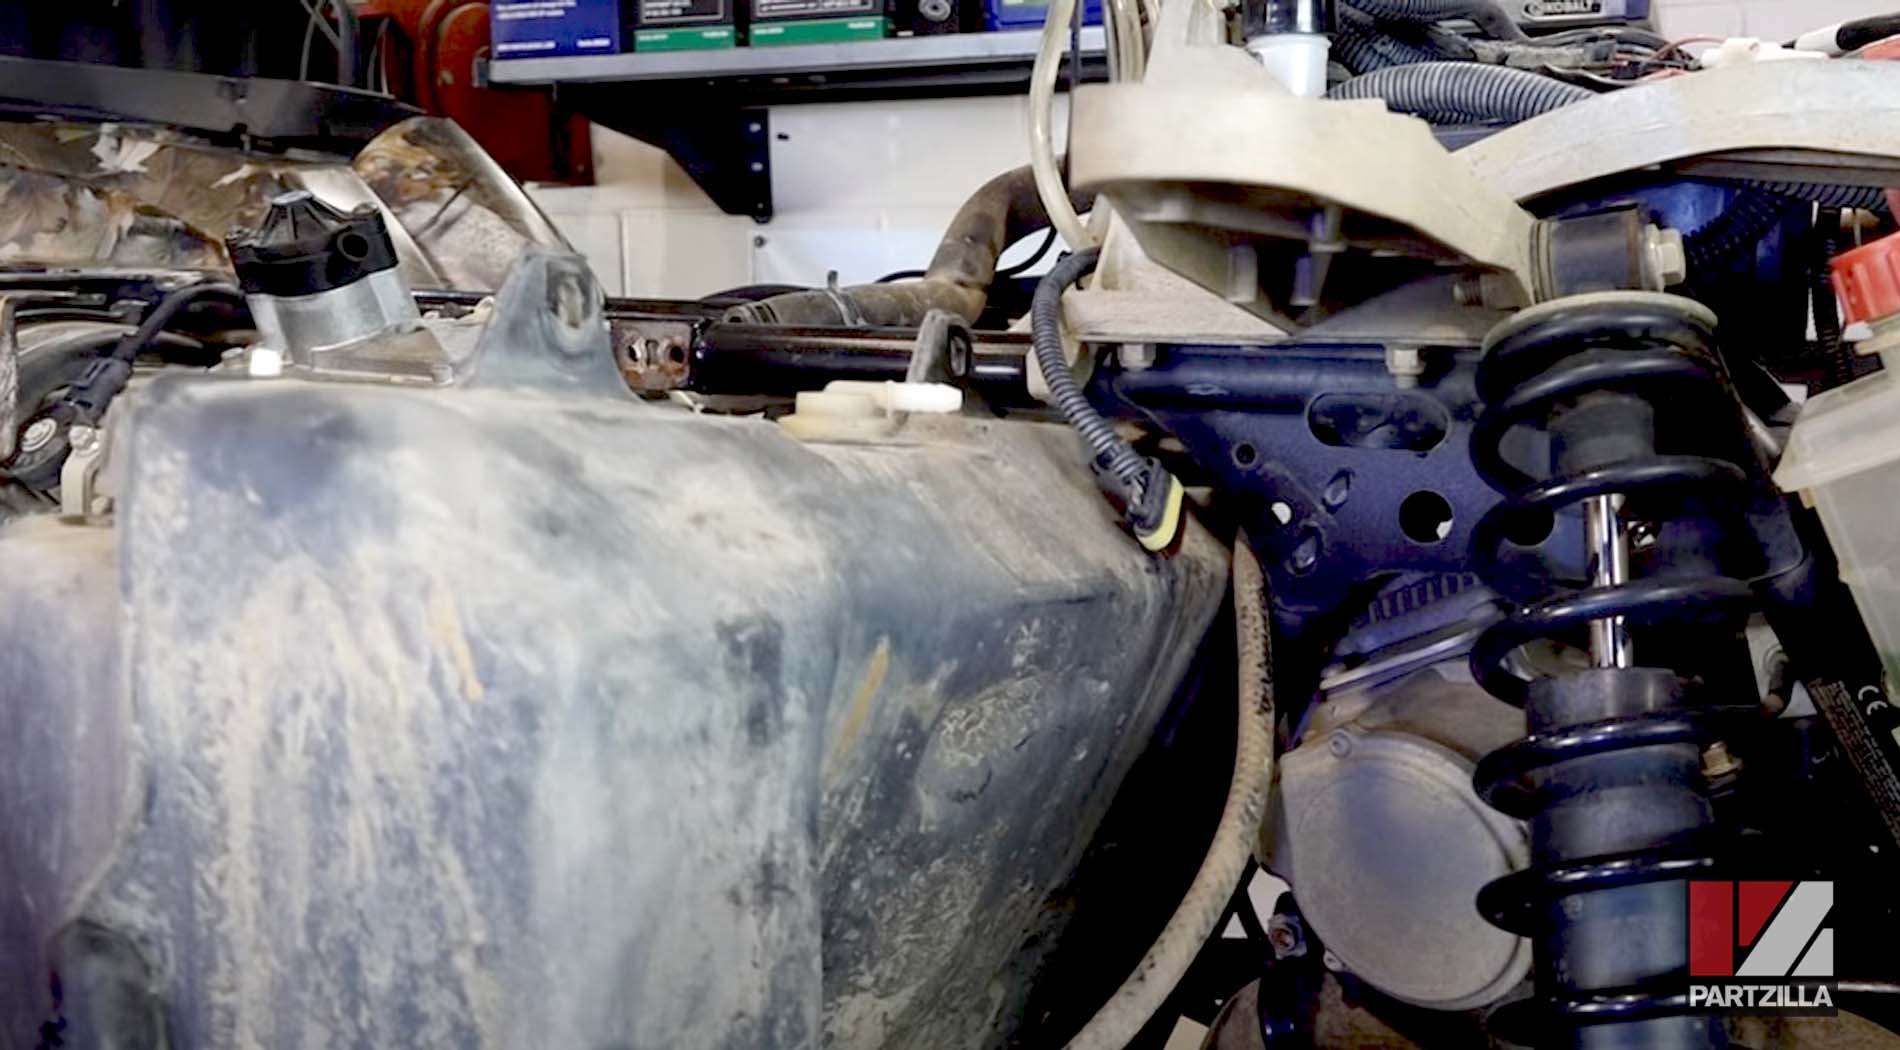 Polaris ATV engine rebuild fuel tank reinstallation